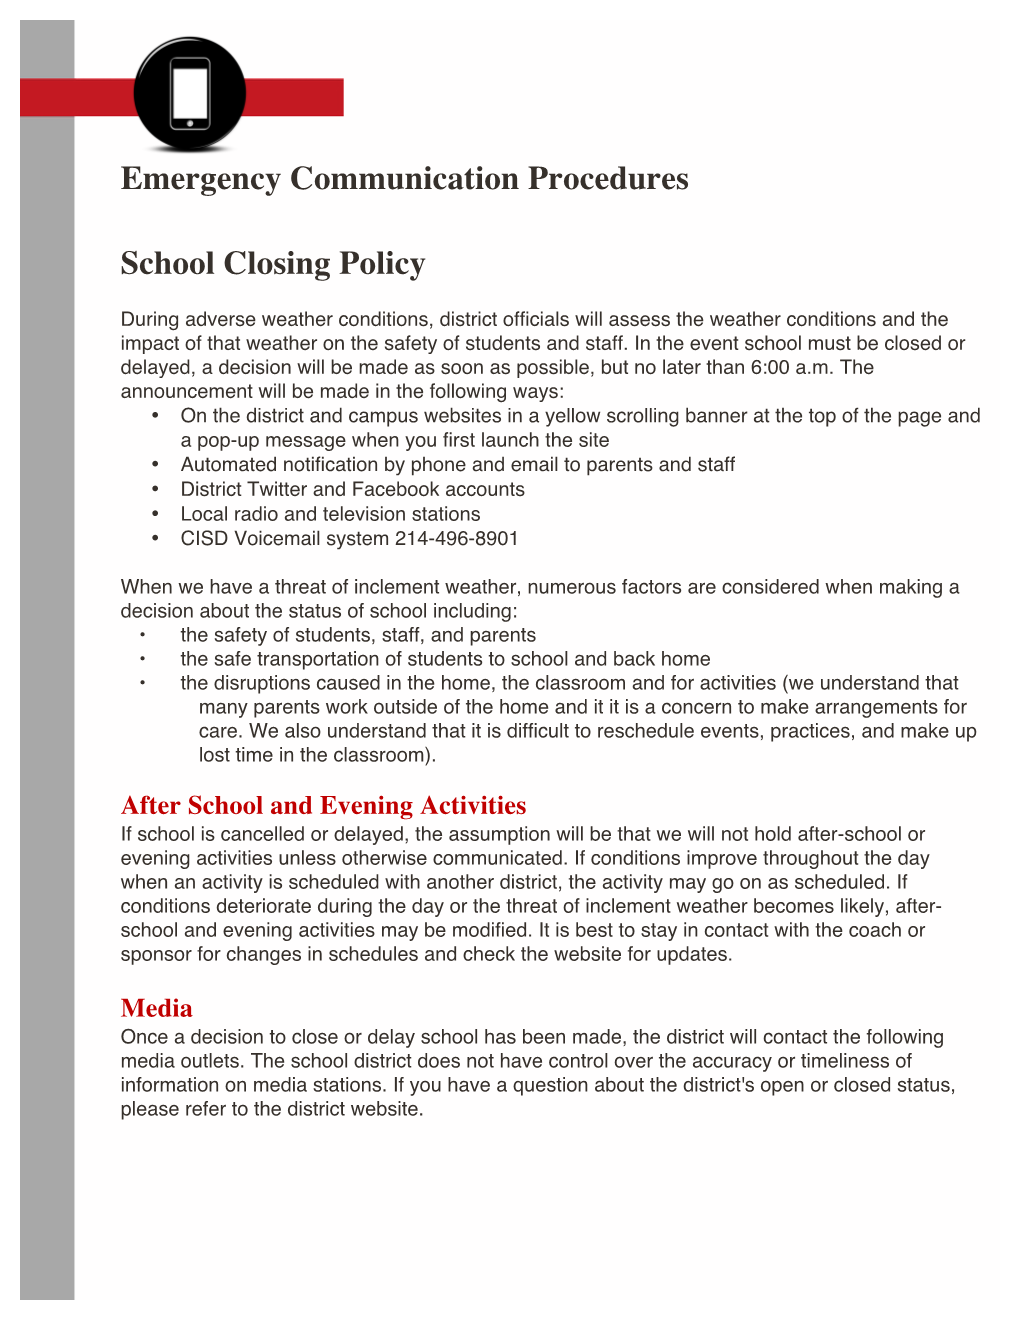 Emergency Communication Procedures School Closing Policy